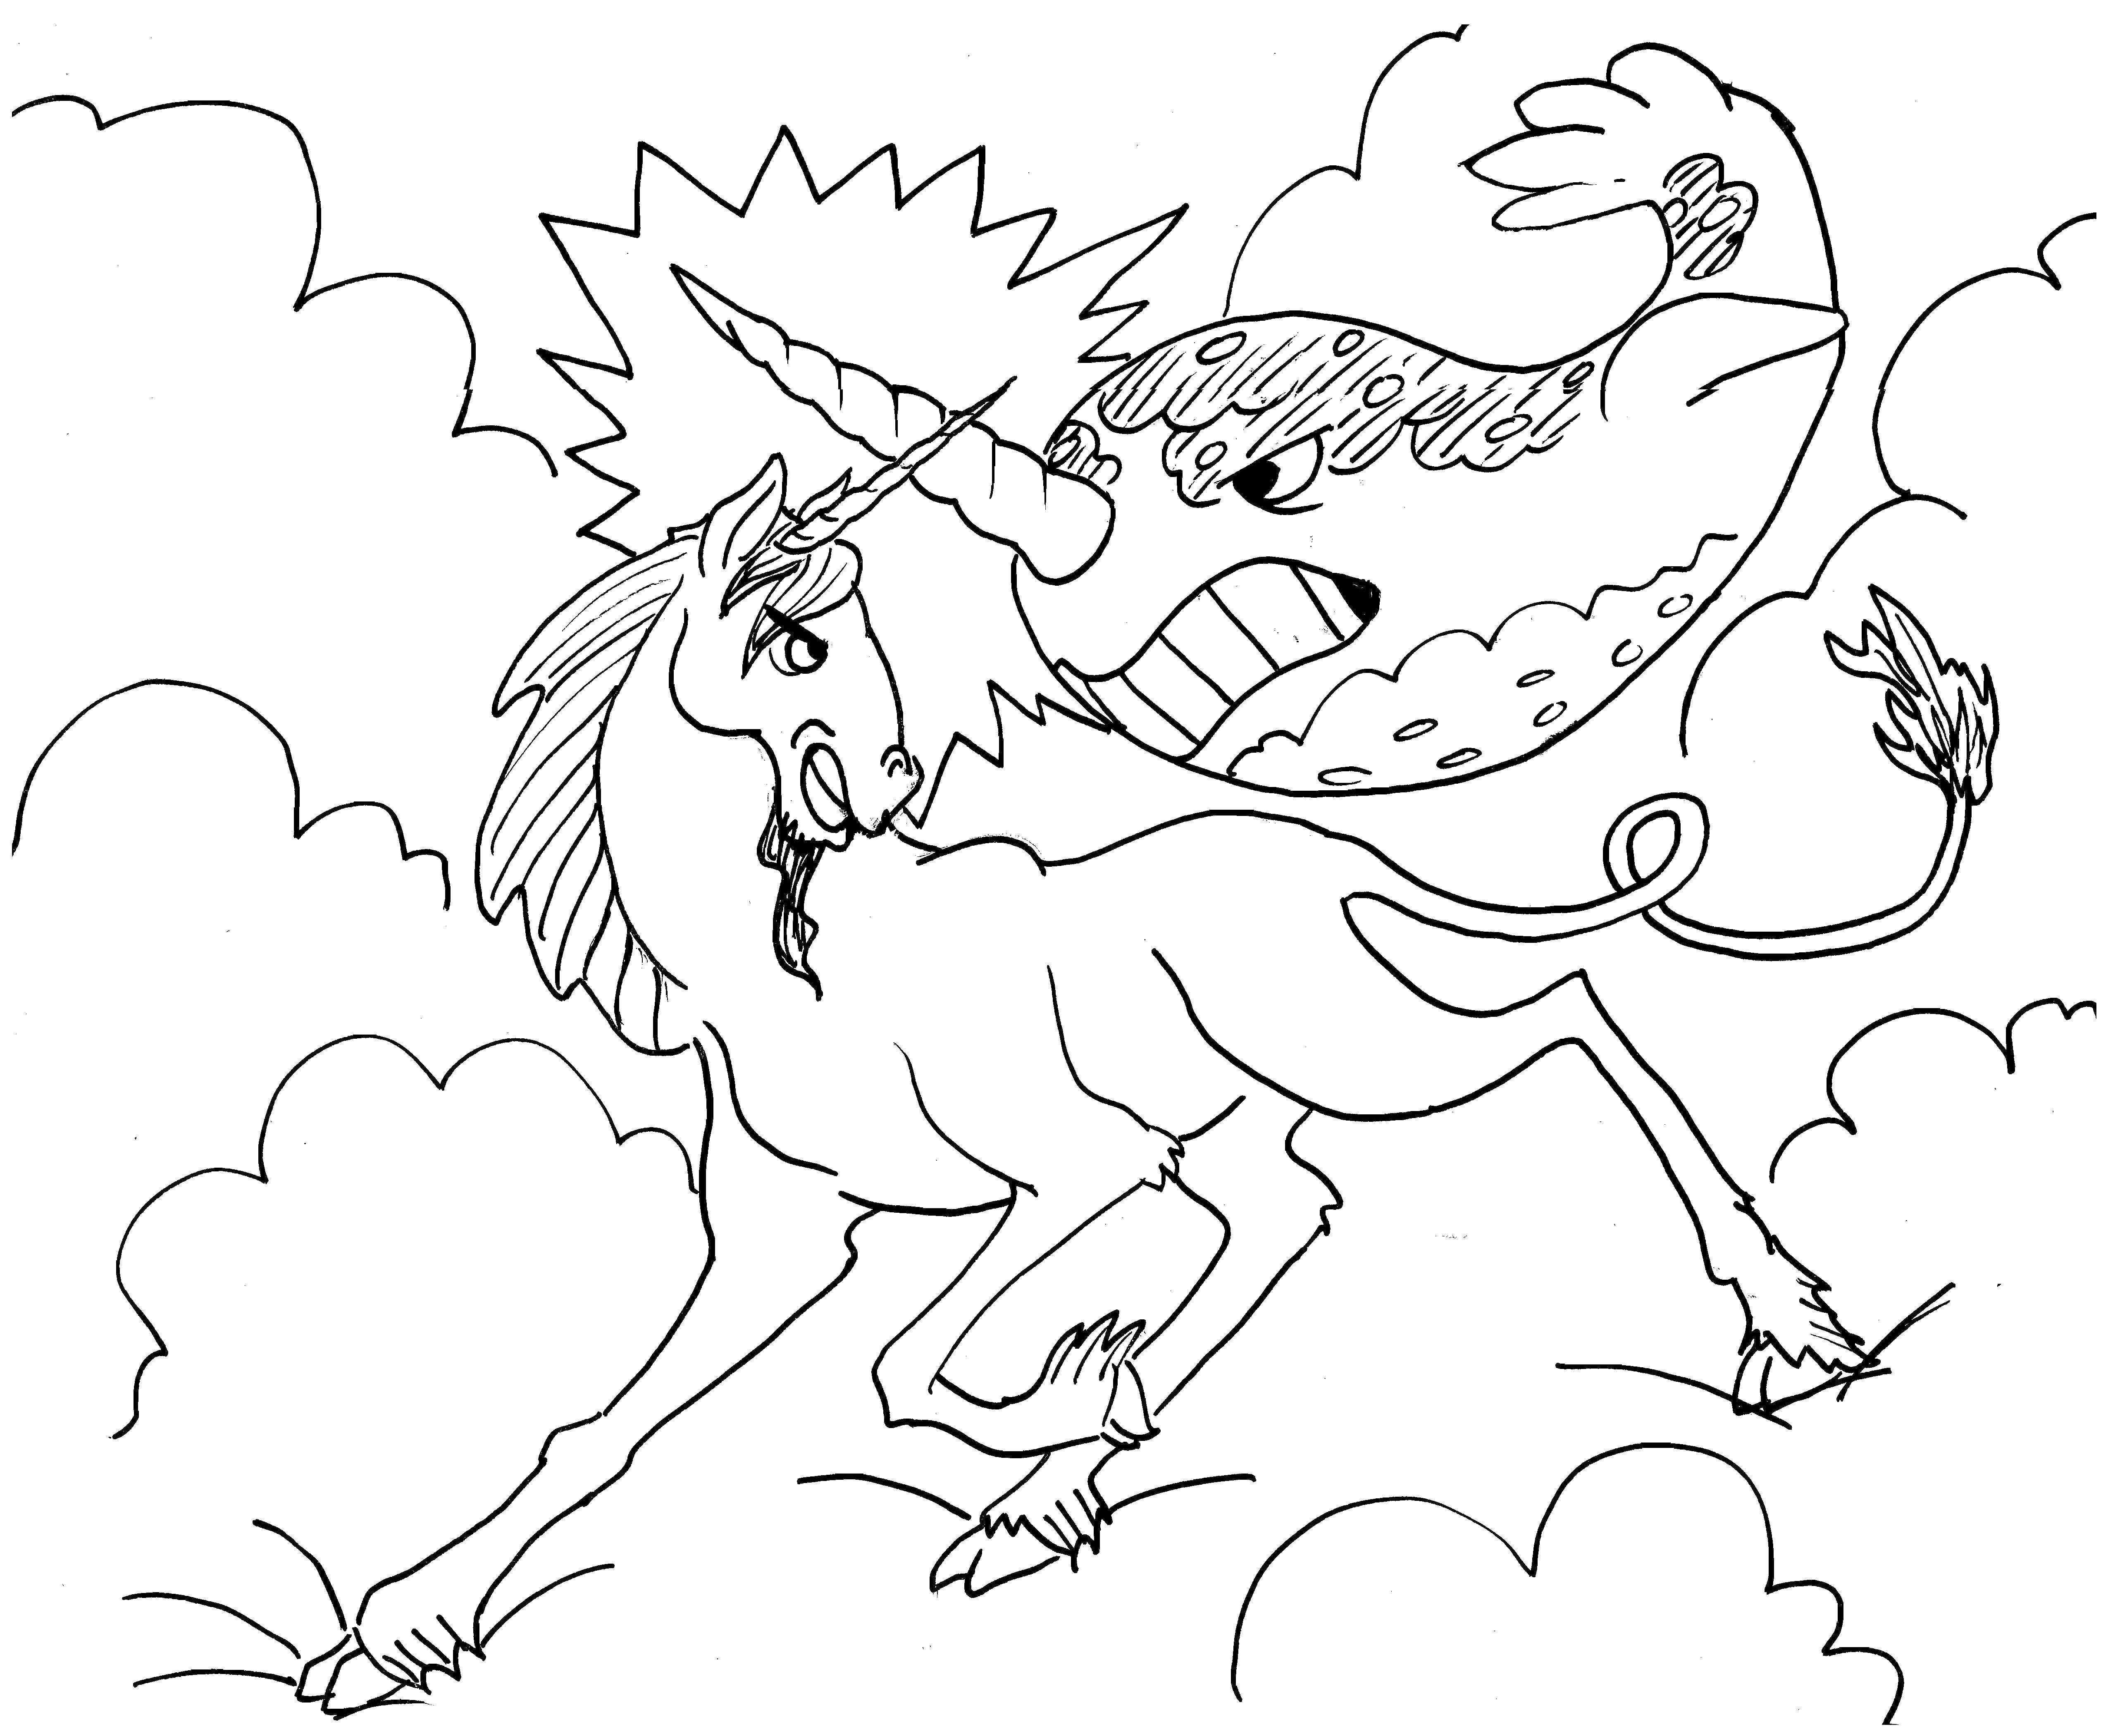 Coloring Unicorn. Category horse. Tags:  a horse, unicorn.